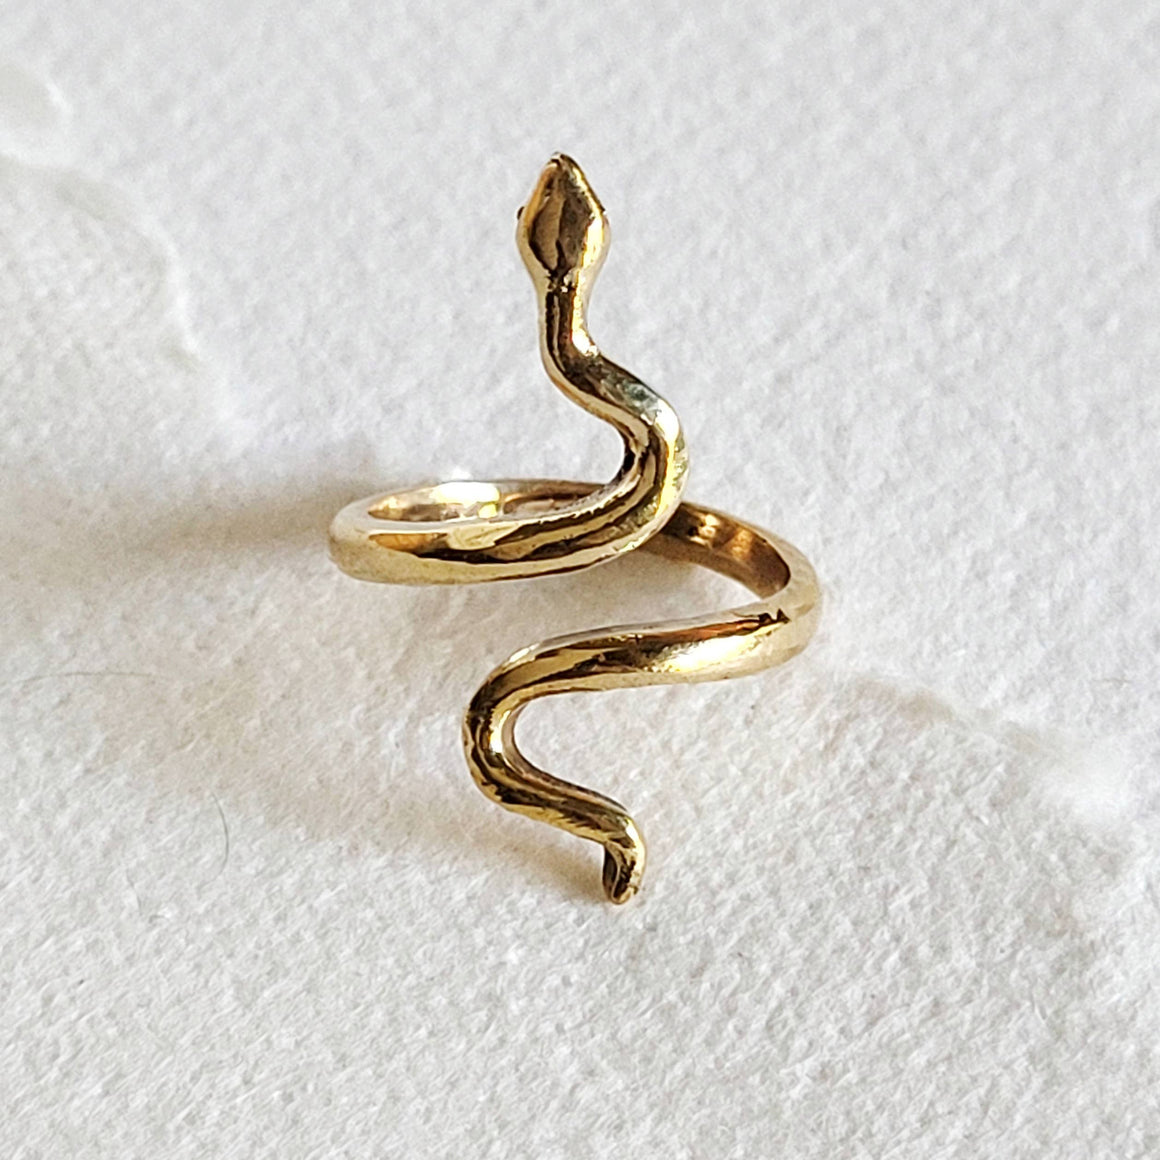 Smooth Brass Serpent Ring